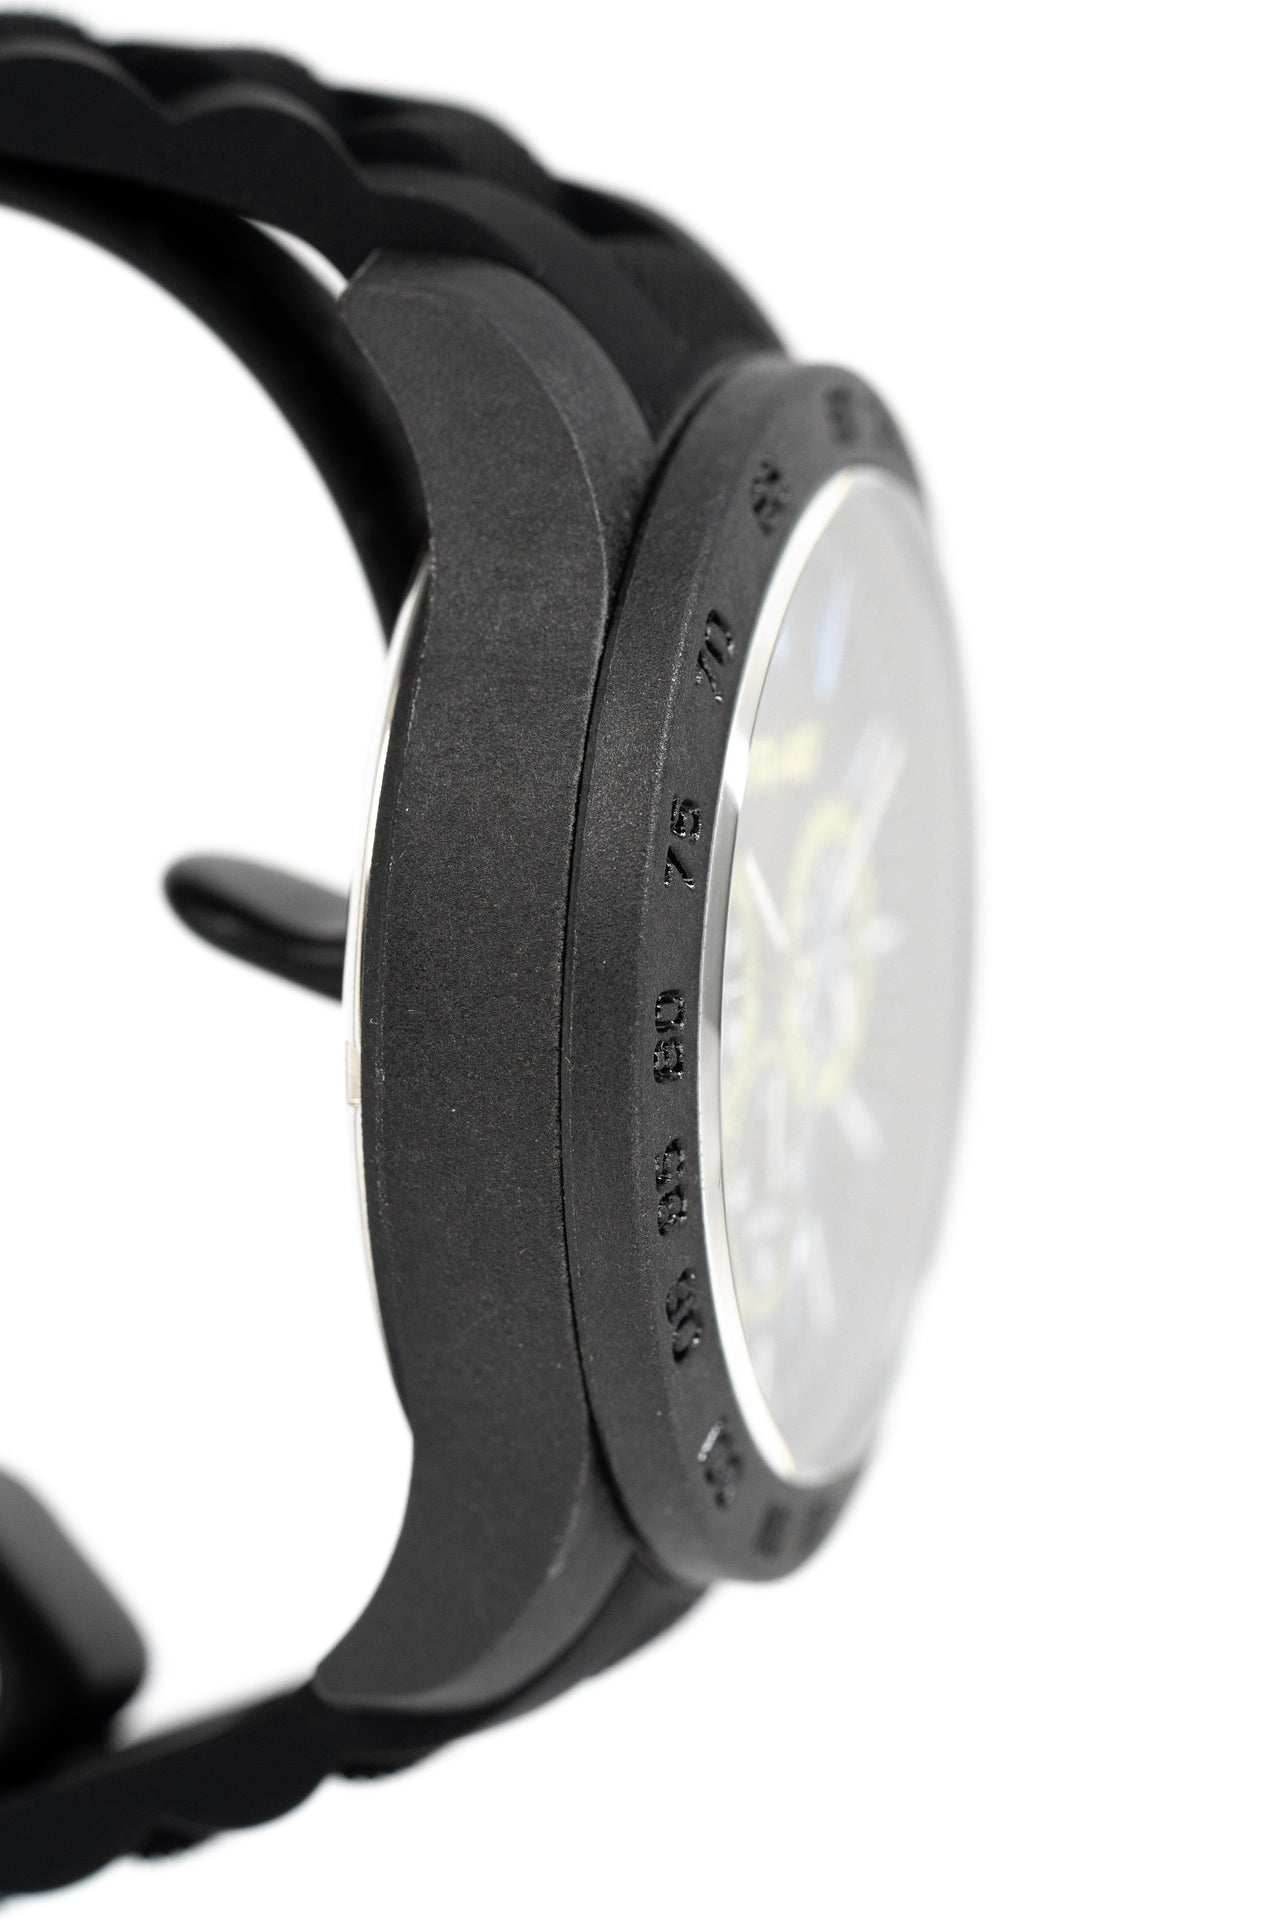 TW Steel Chronograph Watch VR/46 Black VR114